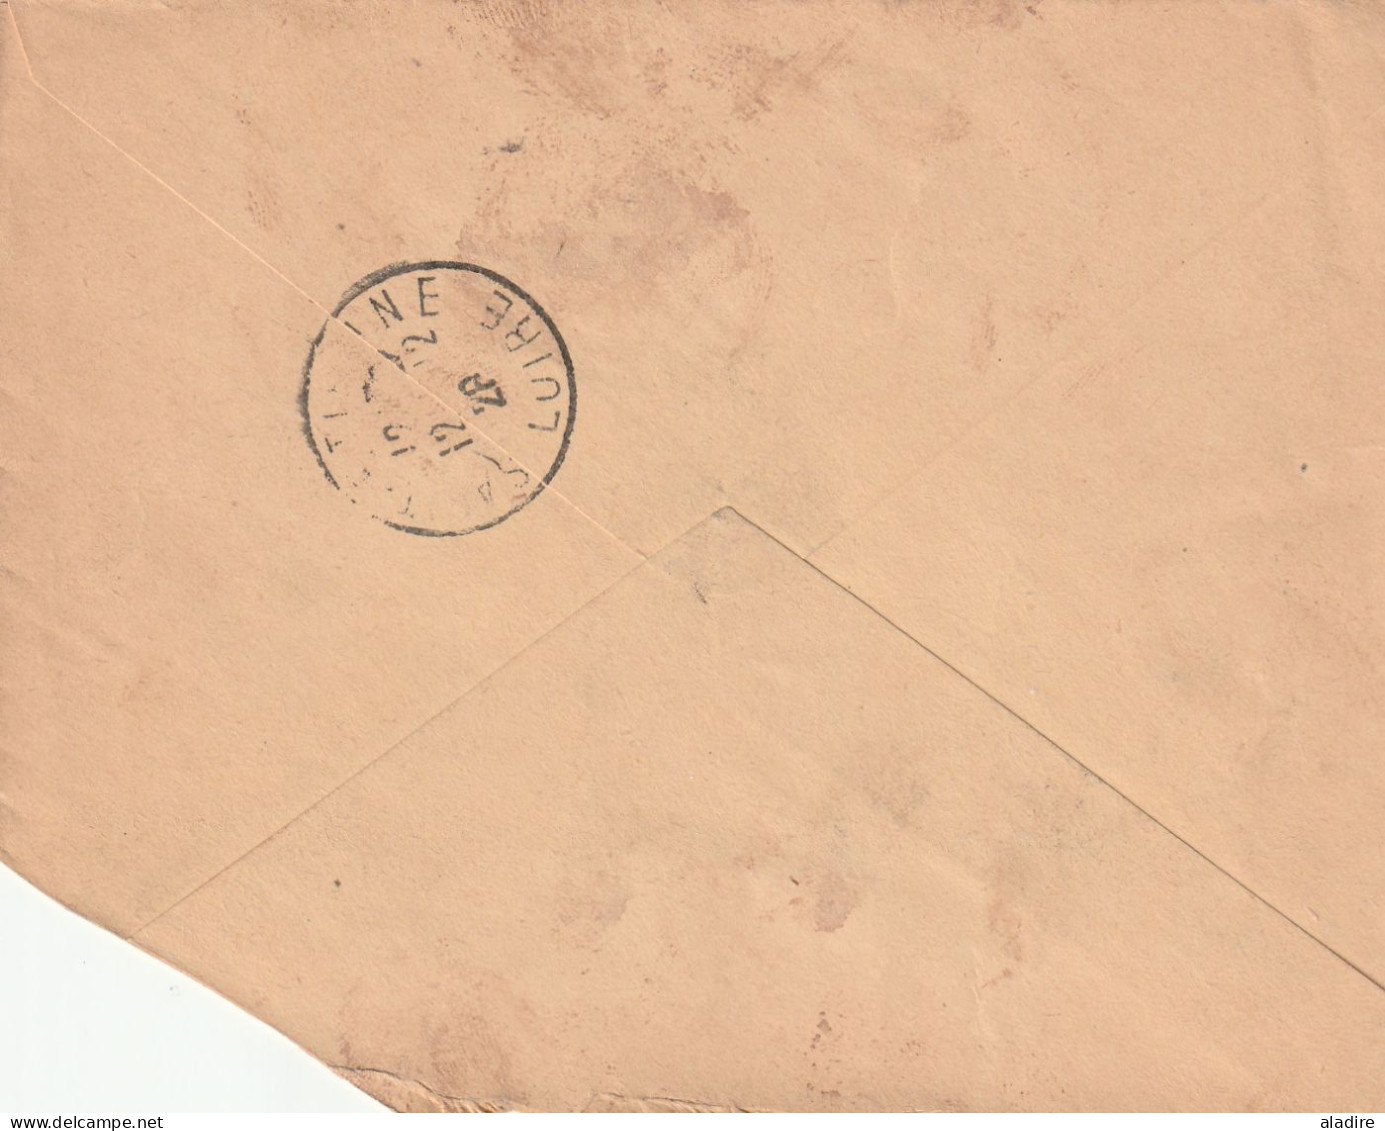 AEF - Collection de 13 cartes, enveloppes, devant, entiers - 1900/1956 - Congo, Gabon, Centrafrique, Tchad